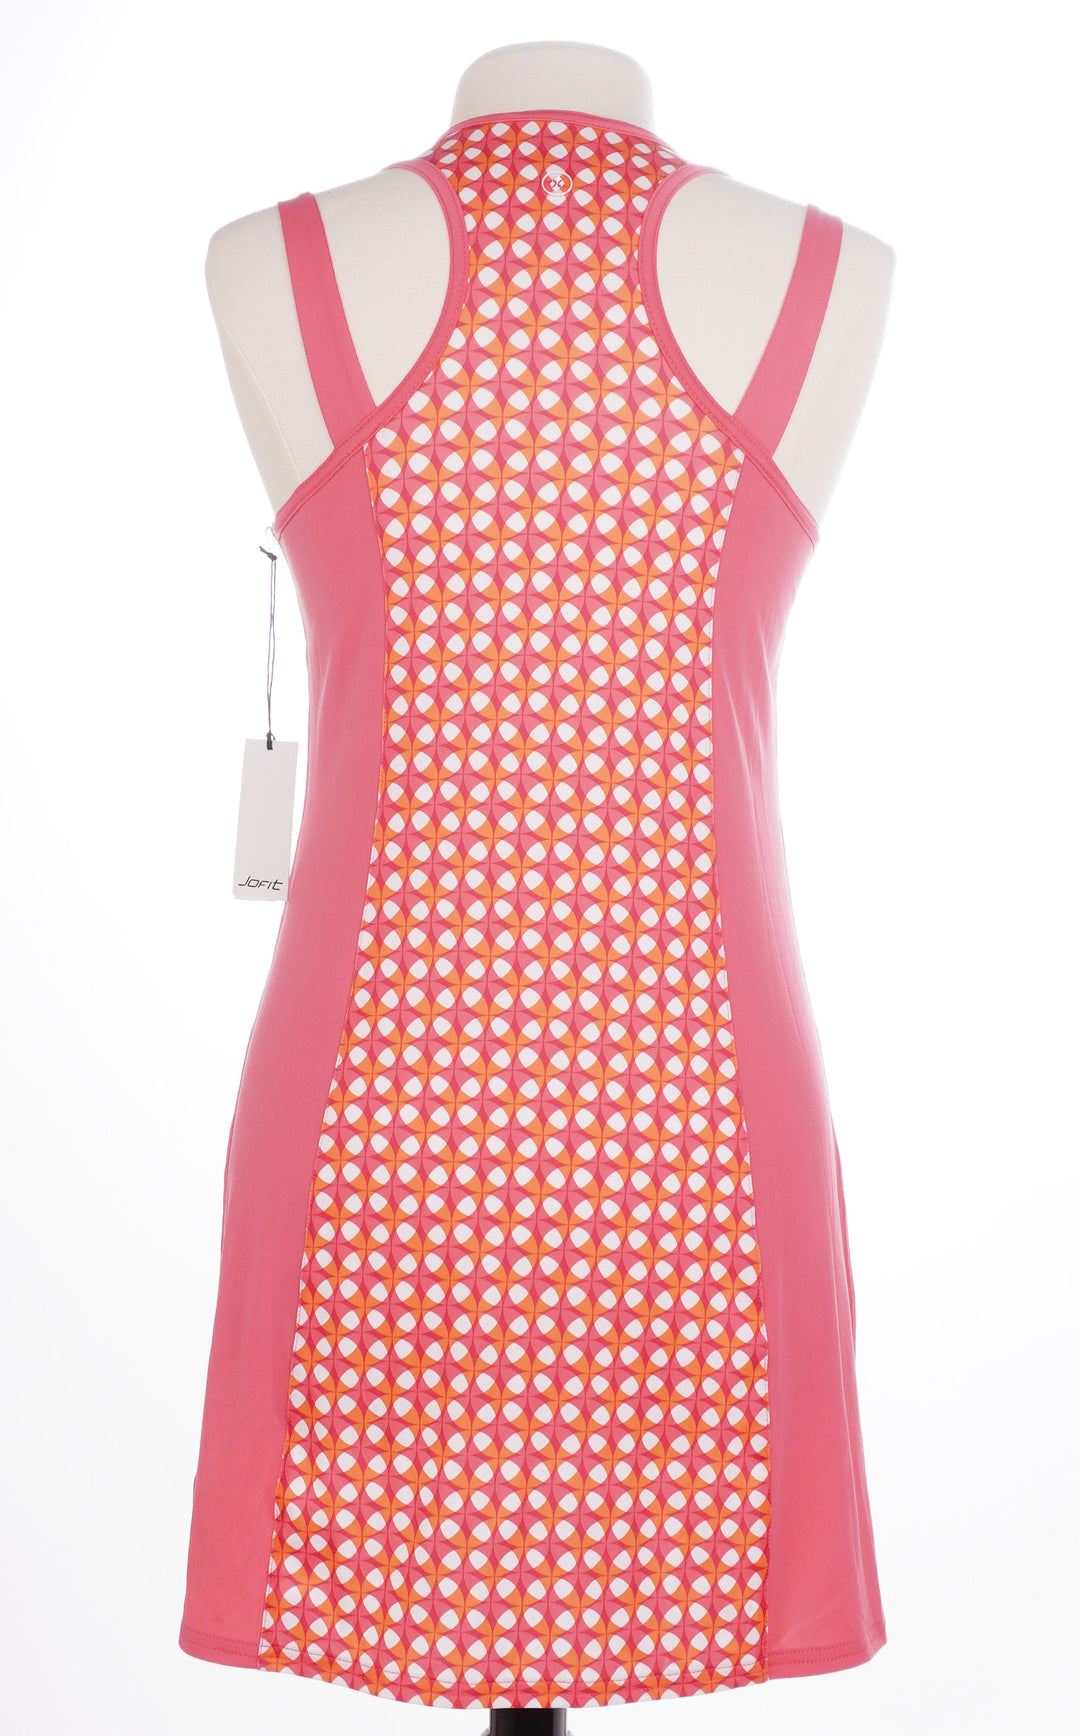 Jofit Tonal Diamond Print Dress - Size Small - Skorzie